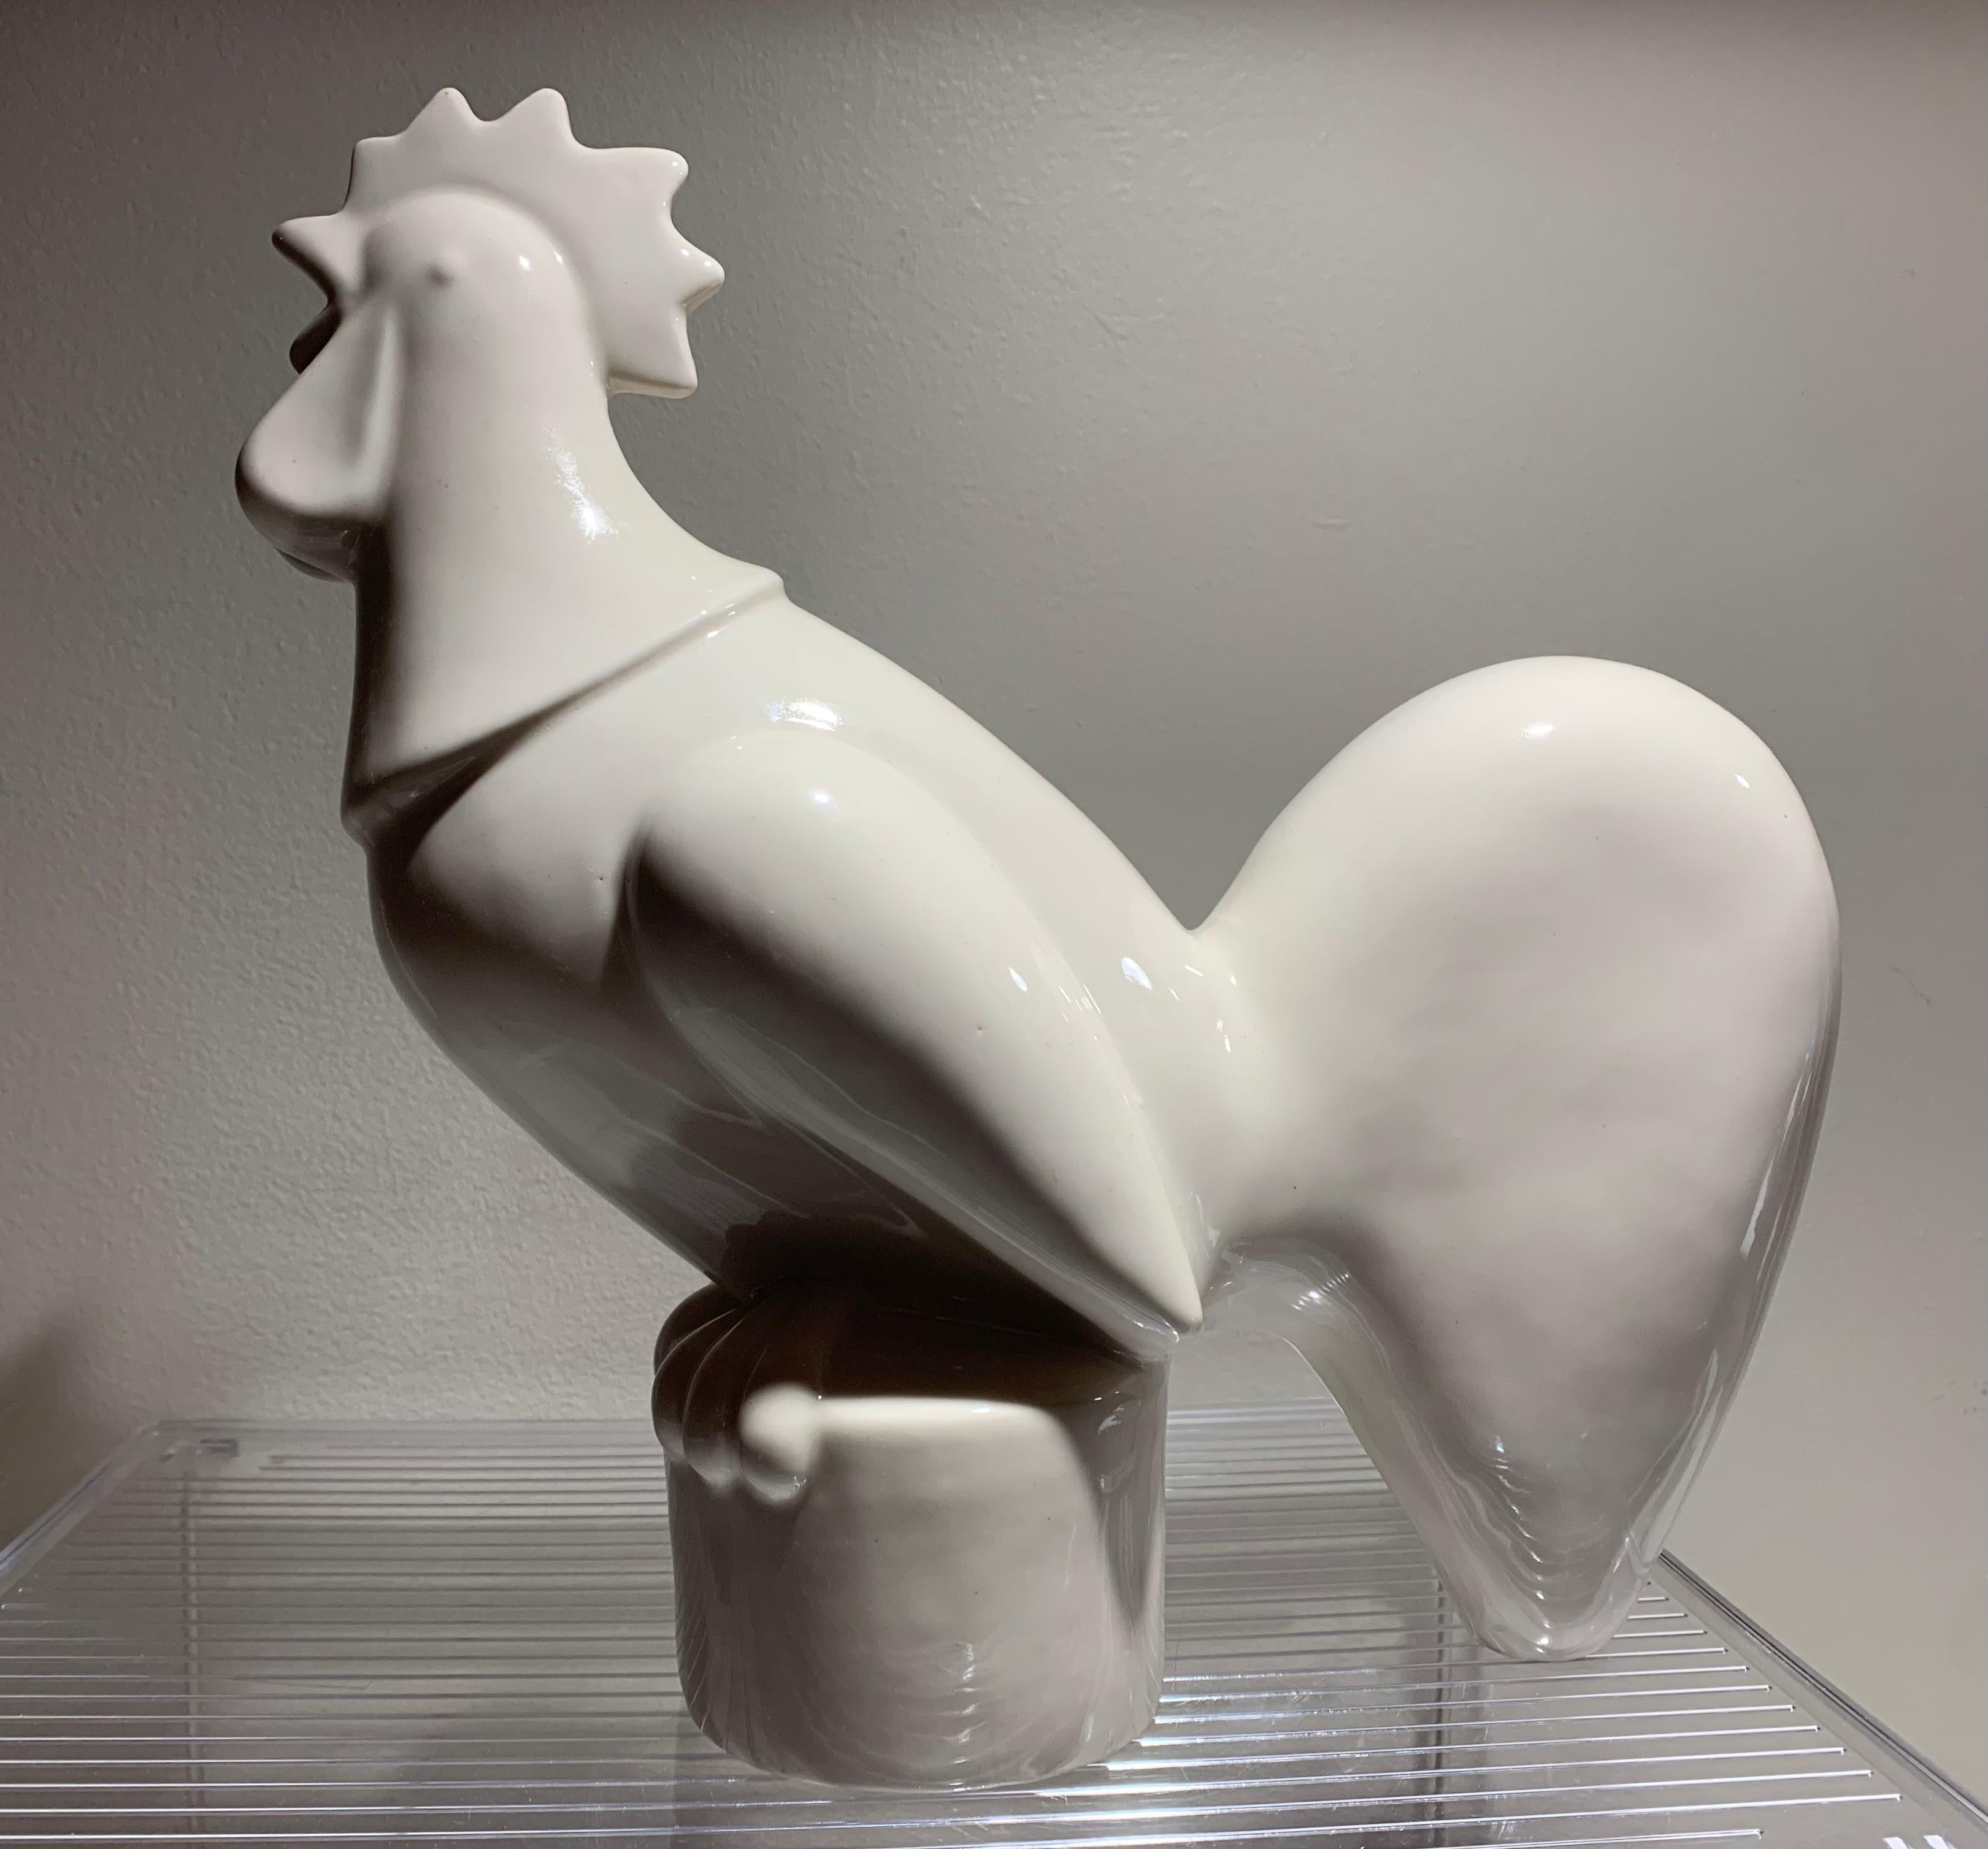 Waylande Gregory Art Deco ceramic rooster sculpture, glazed, 1940s, USA 
Literature:
Folk, Thomas, Waylande Gregory: Art Deco Ceramics and the Atomic Impulse, University of Richmond Museums, 2013.
Waylande Desantis Gregory (1905 Baxter Springs,